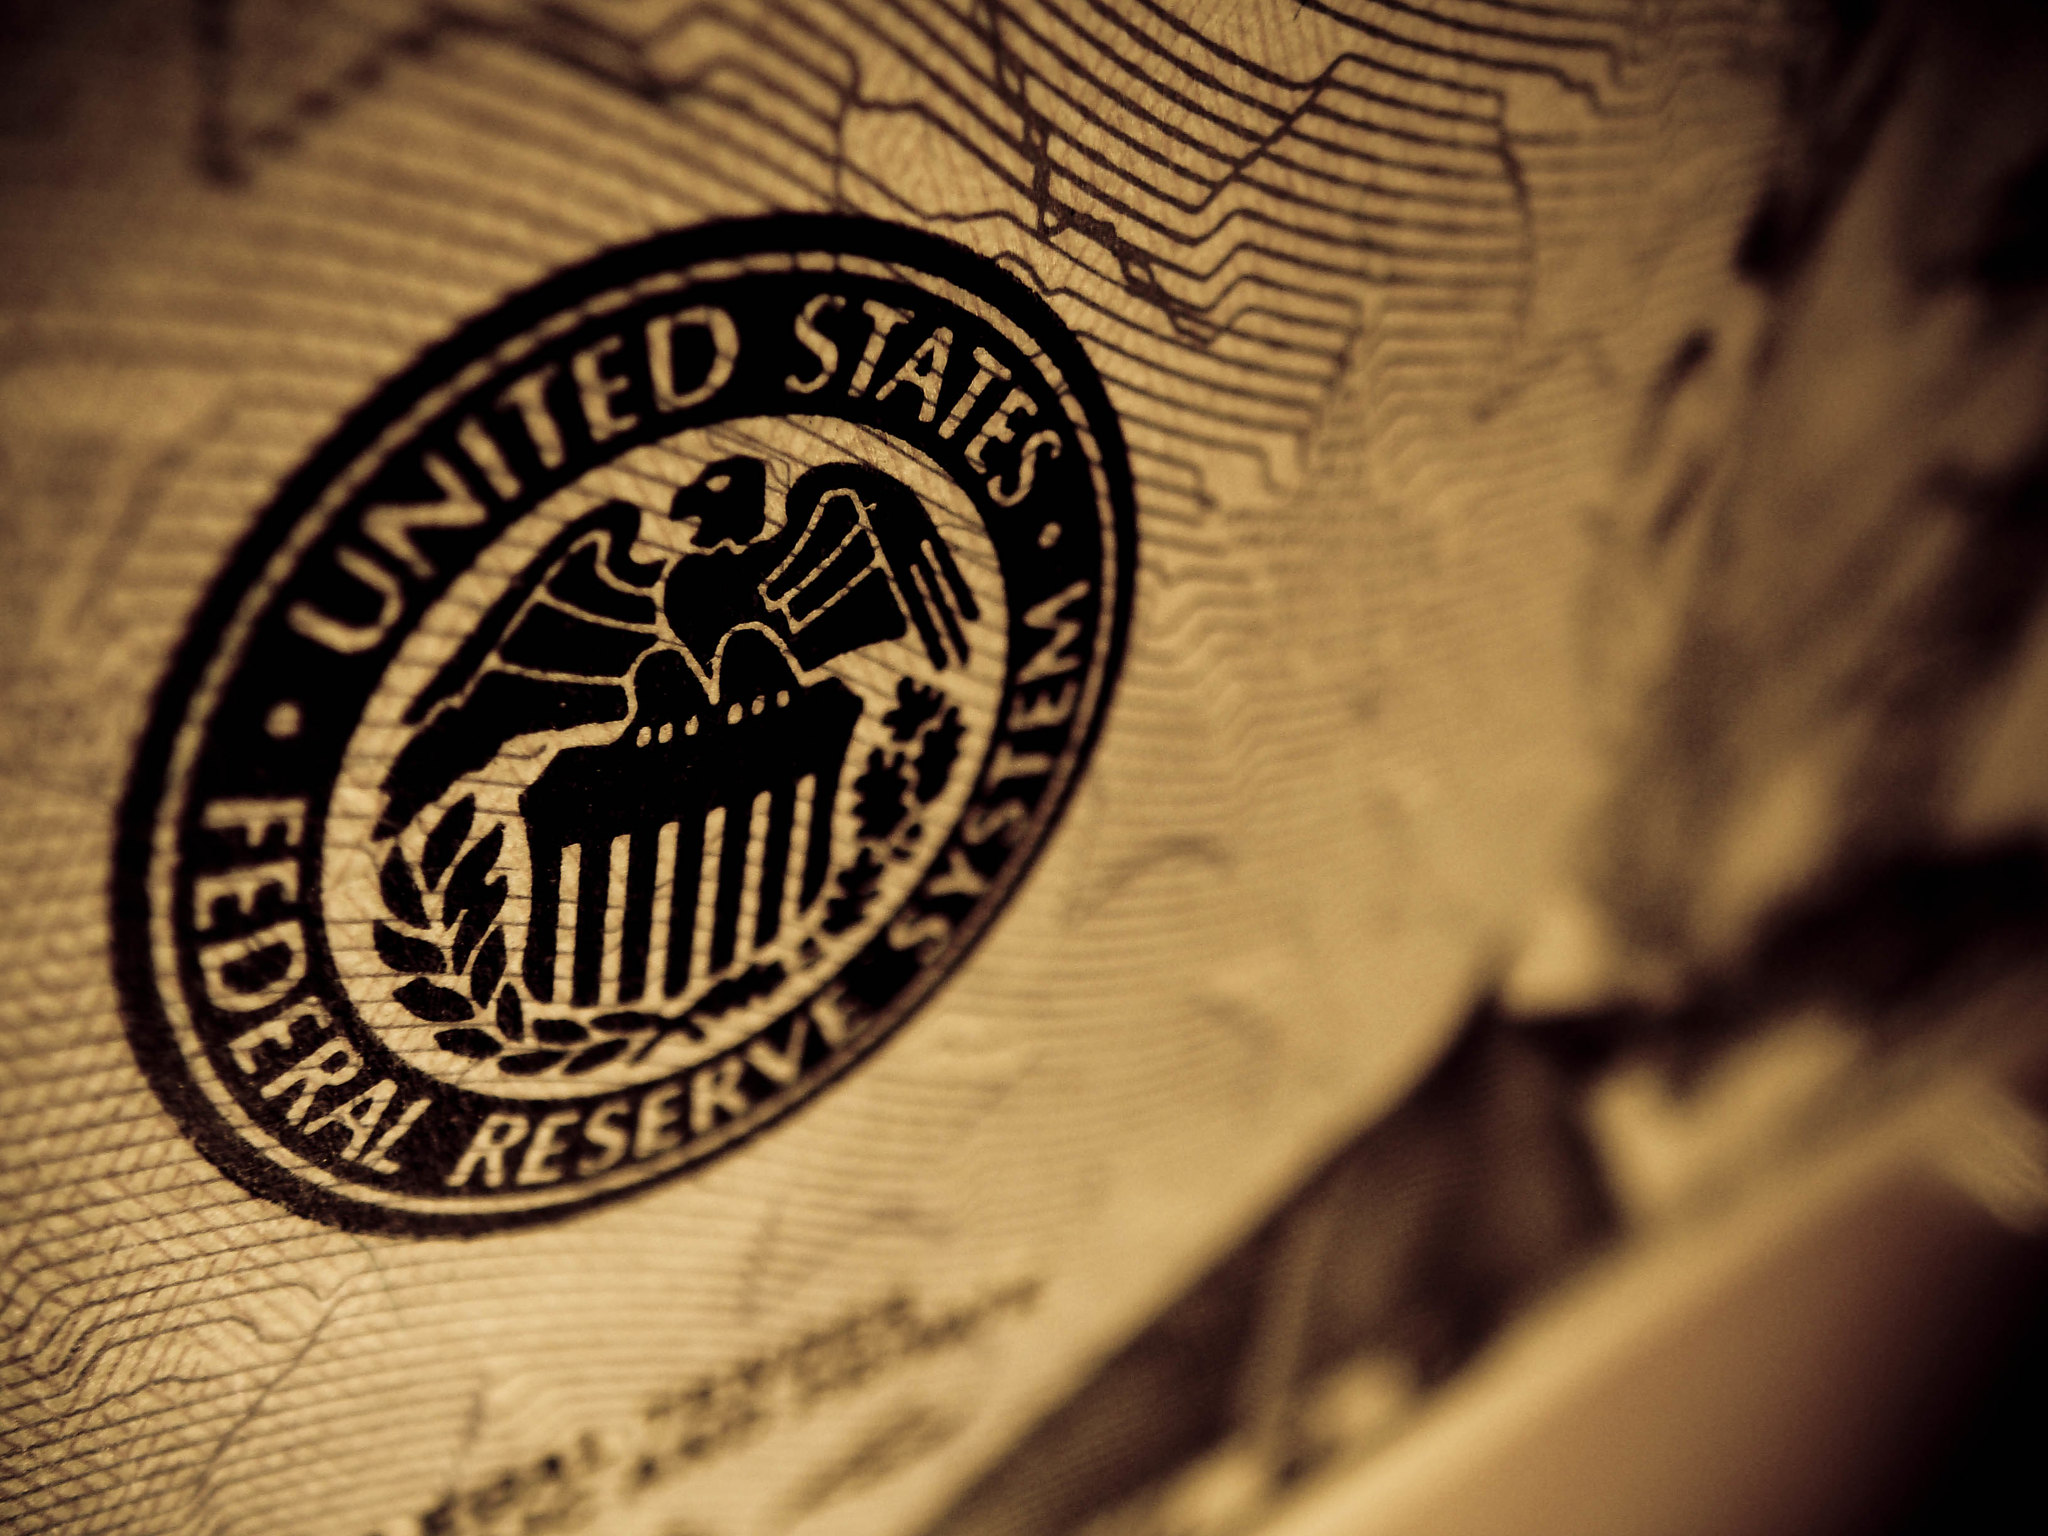 ФРС прервала серию повышений ставки